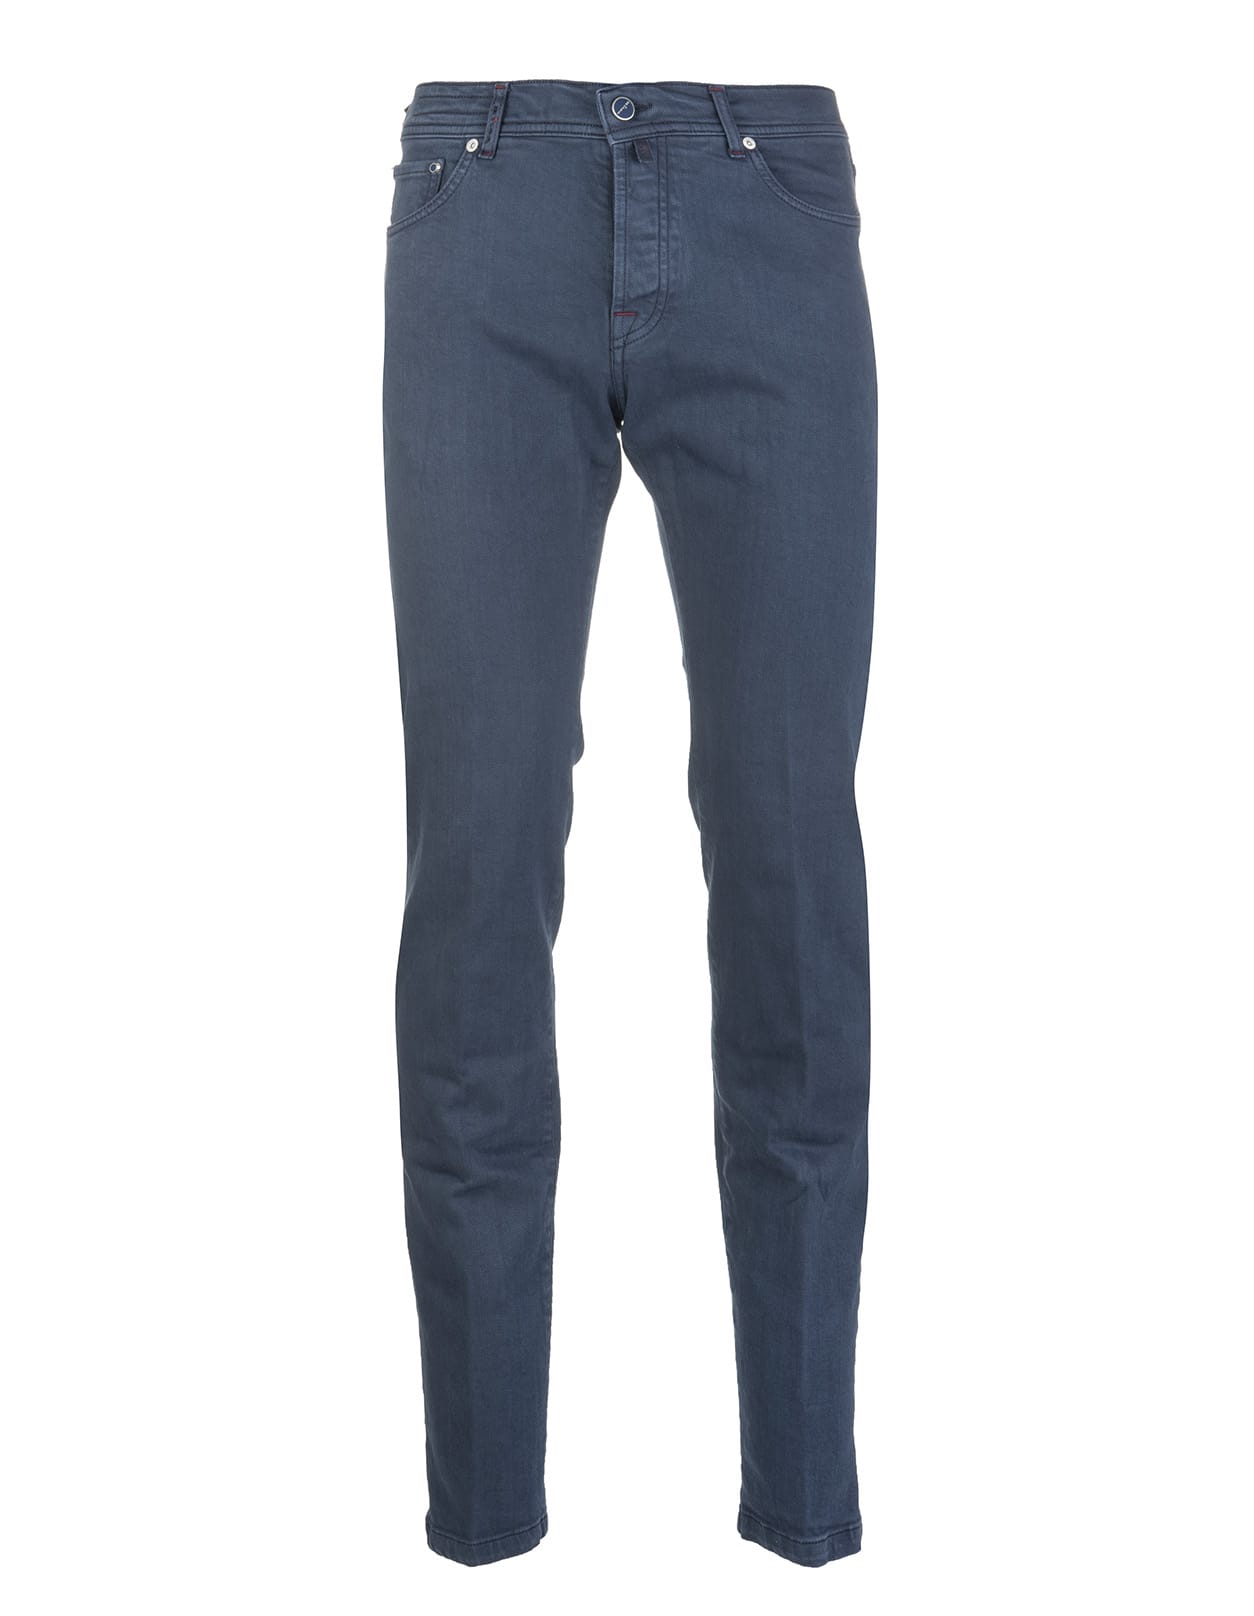 Kiton Man Blue Pant With Five Pocket Design